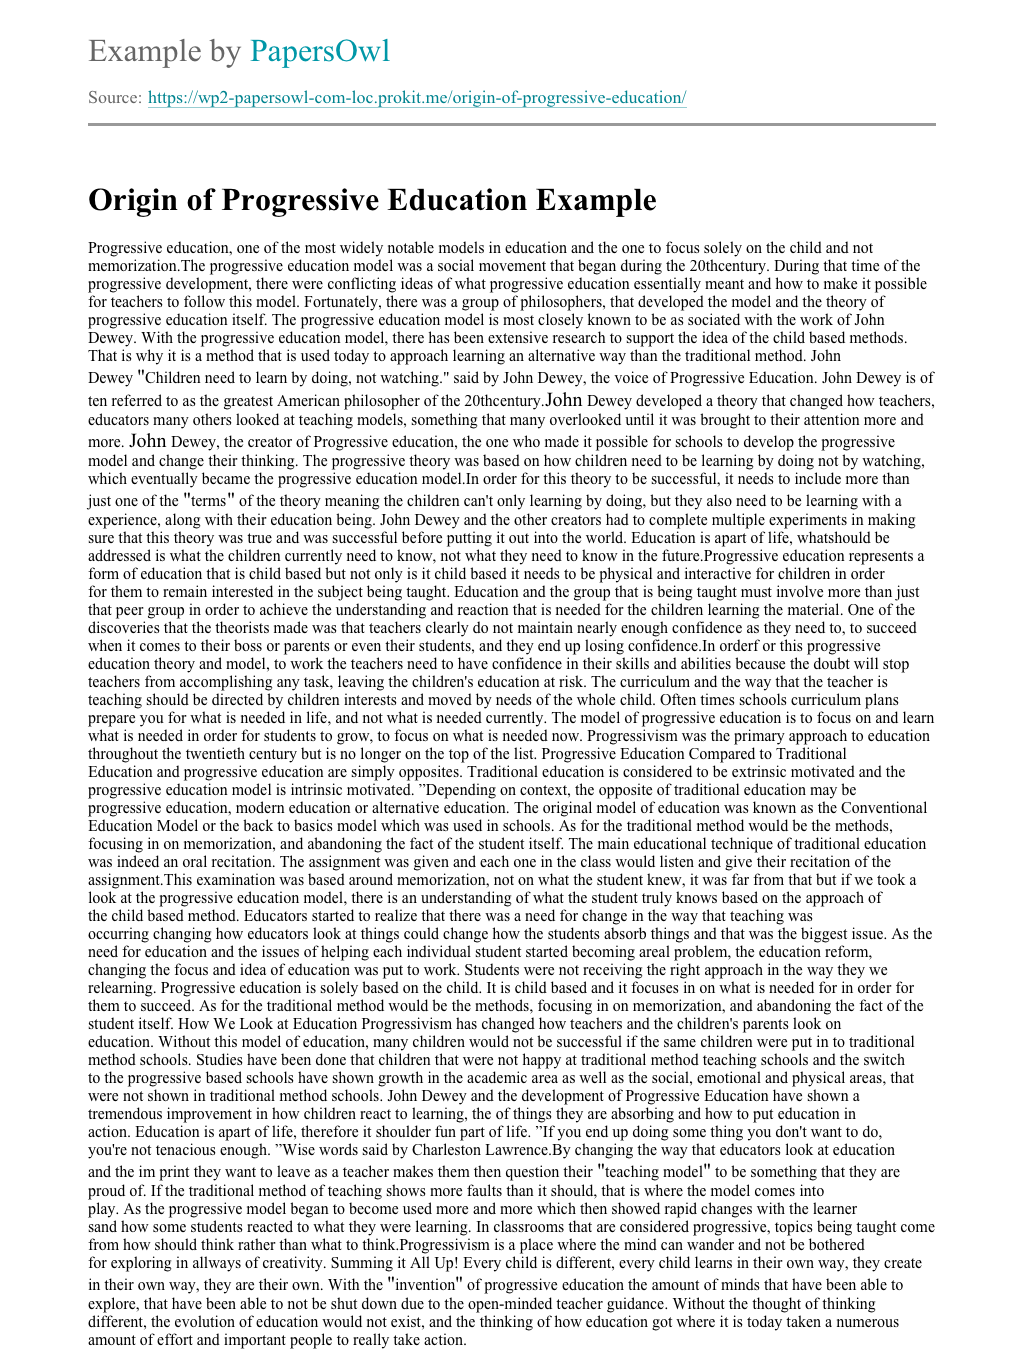 essay on the progressives